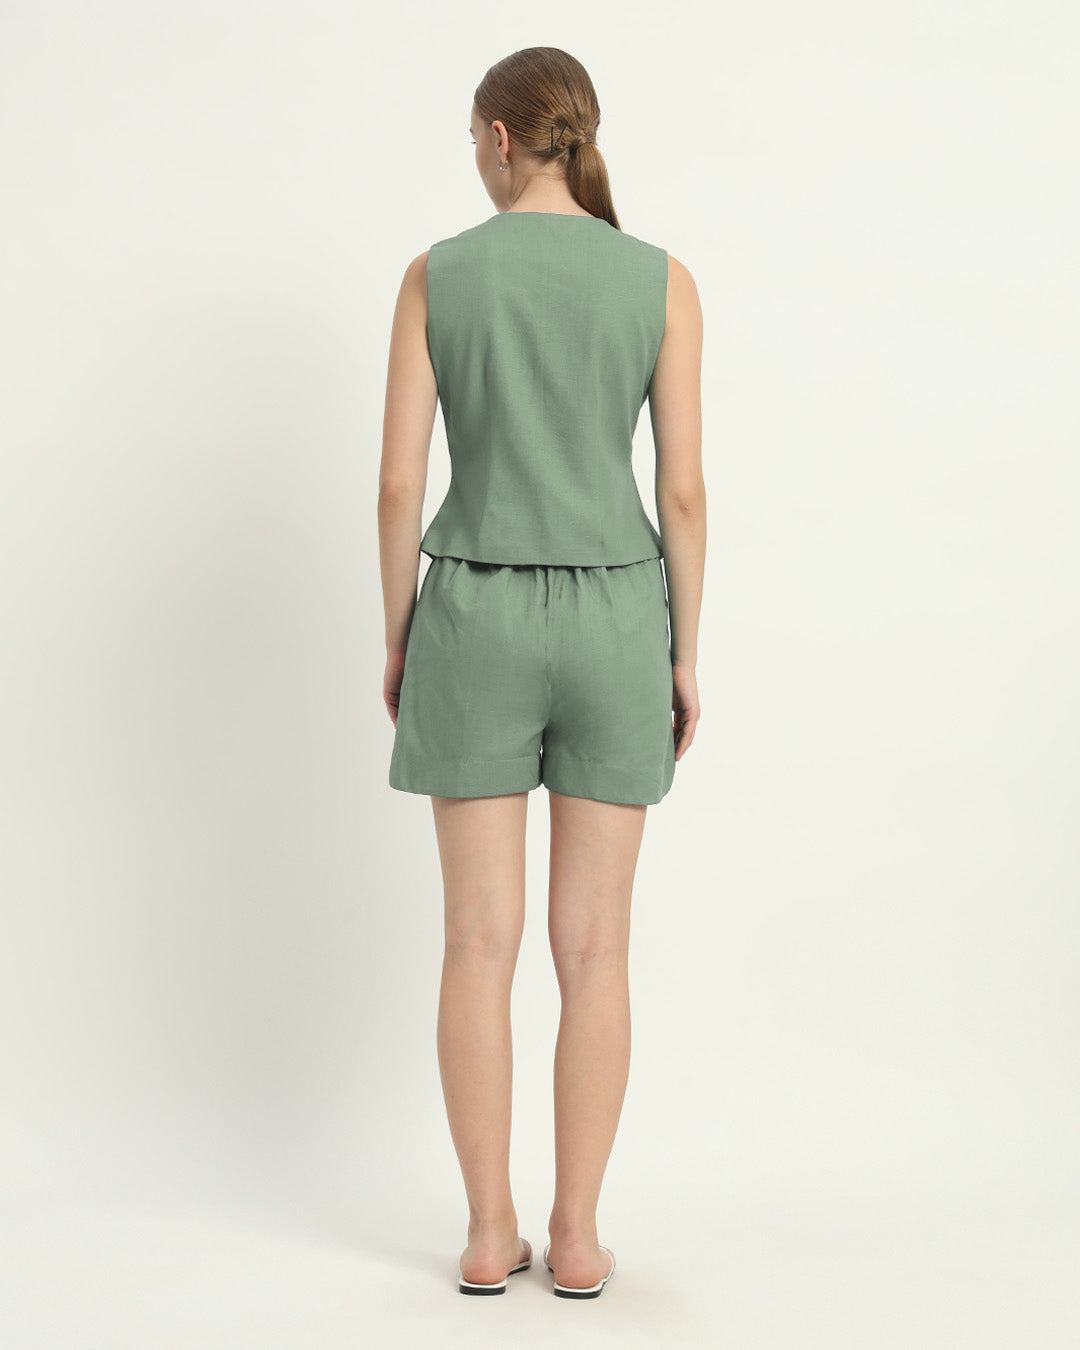 Shorts Matching Set Mint Downtown Diva Vest